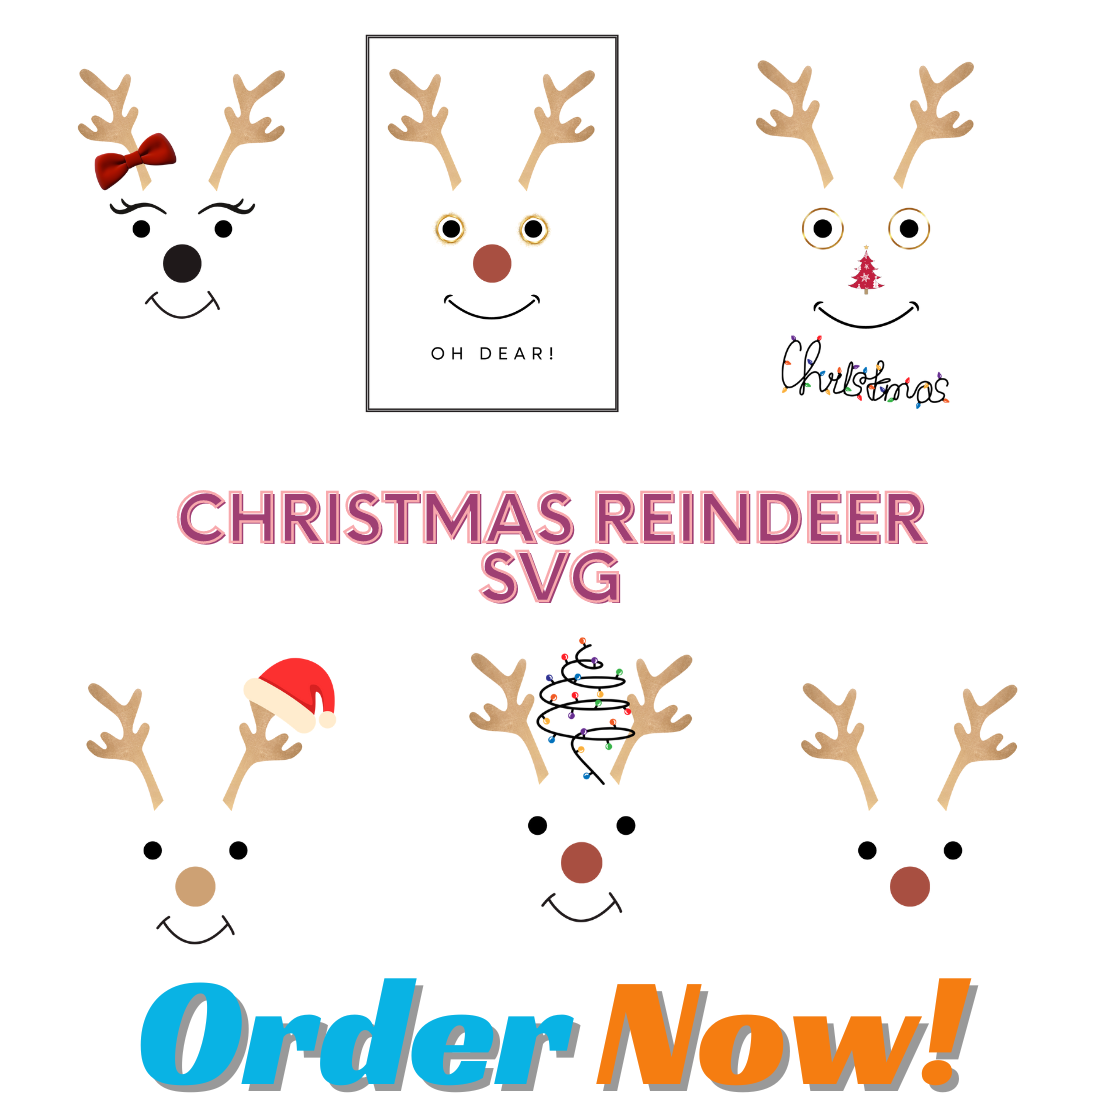 Reindeer SVG, Reindeer Face Svg, Christmas Reindeer Svg, Rudolph reindeer svg, Xmas reindeer svg, Santa reindeer, DXF Cricut cut file vector preview image.